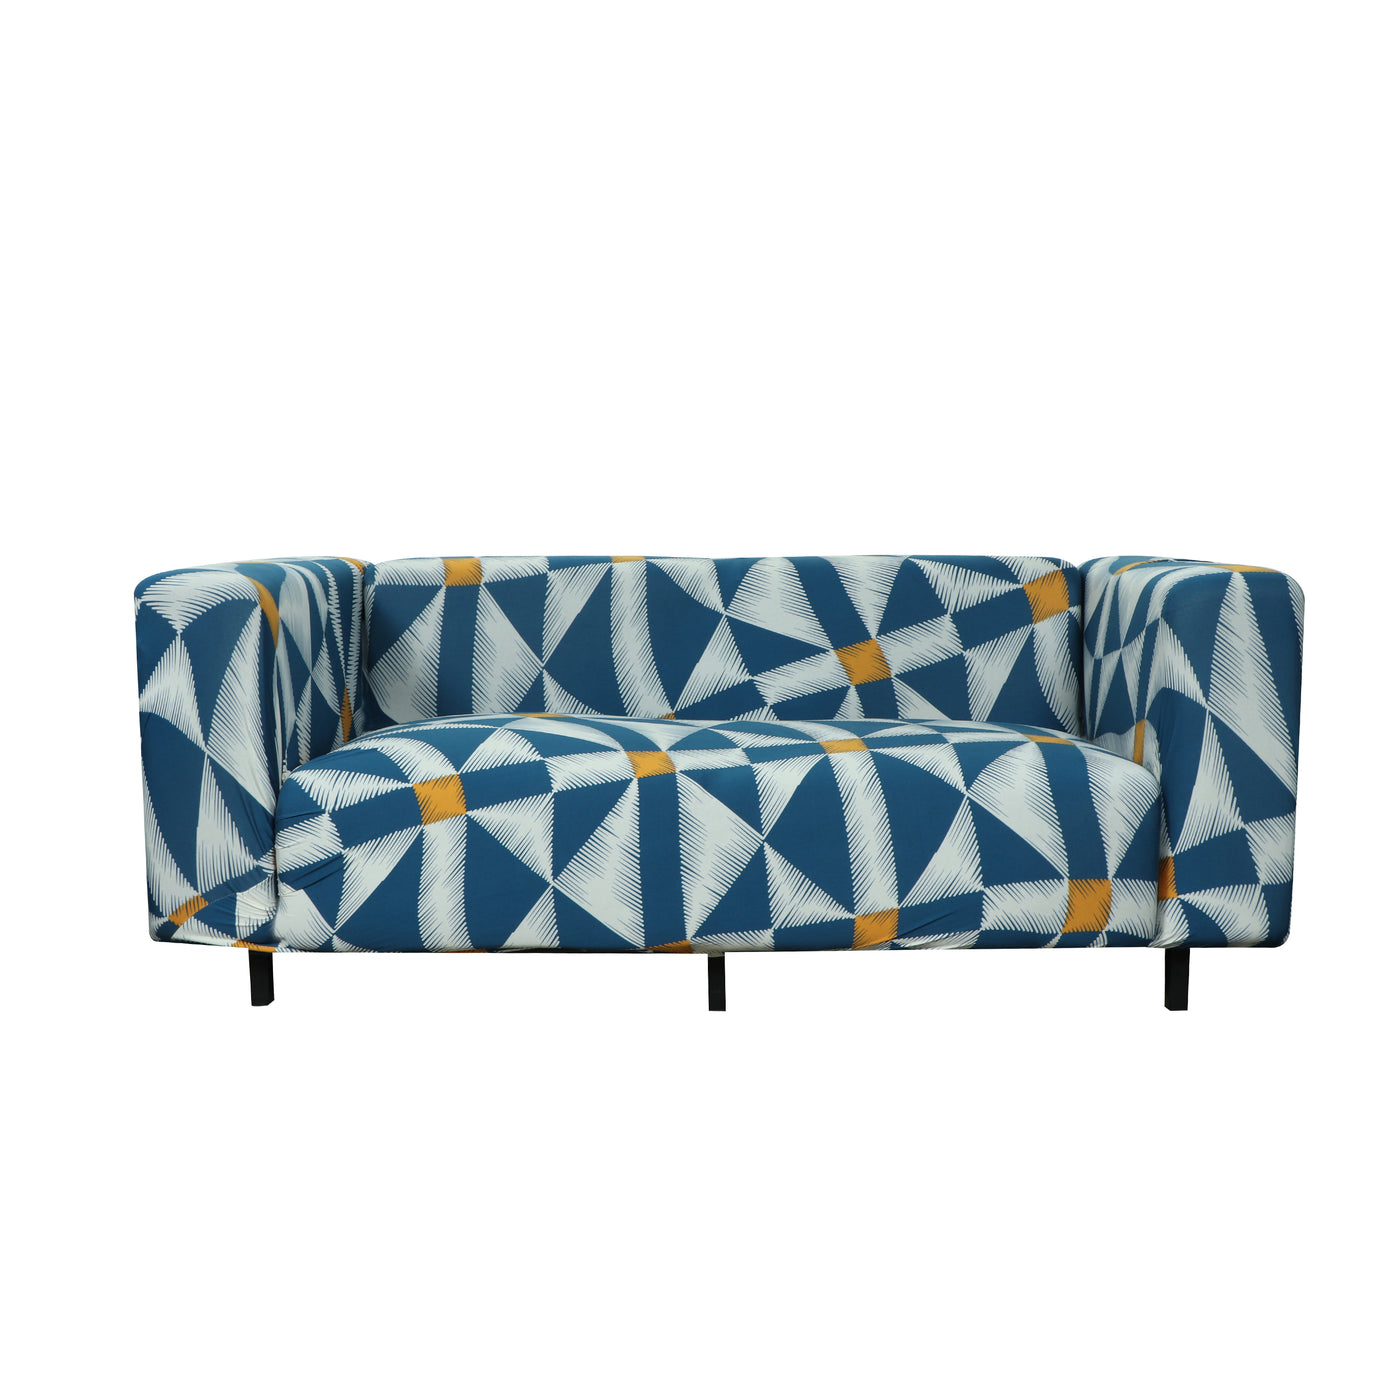 Printed Sofa Cover - Greek Blue